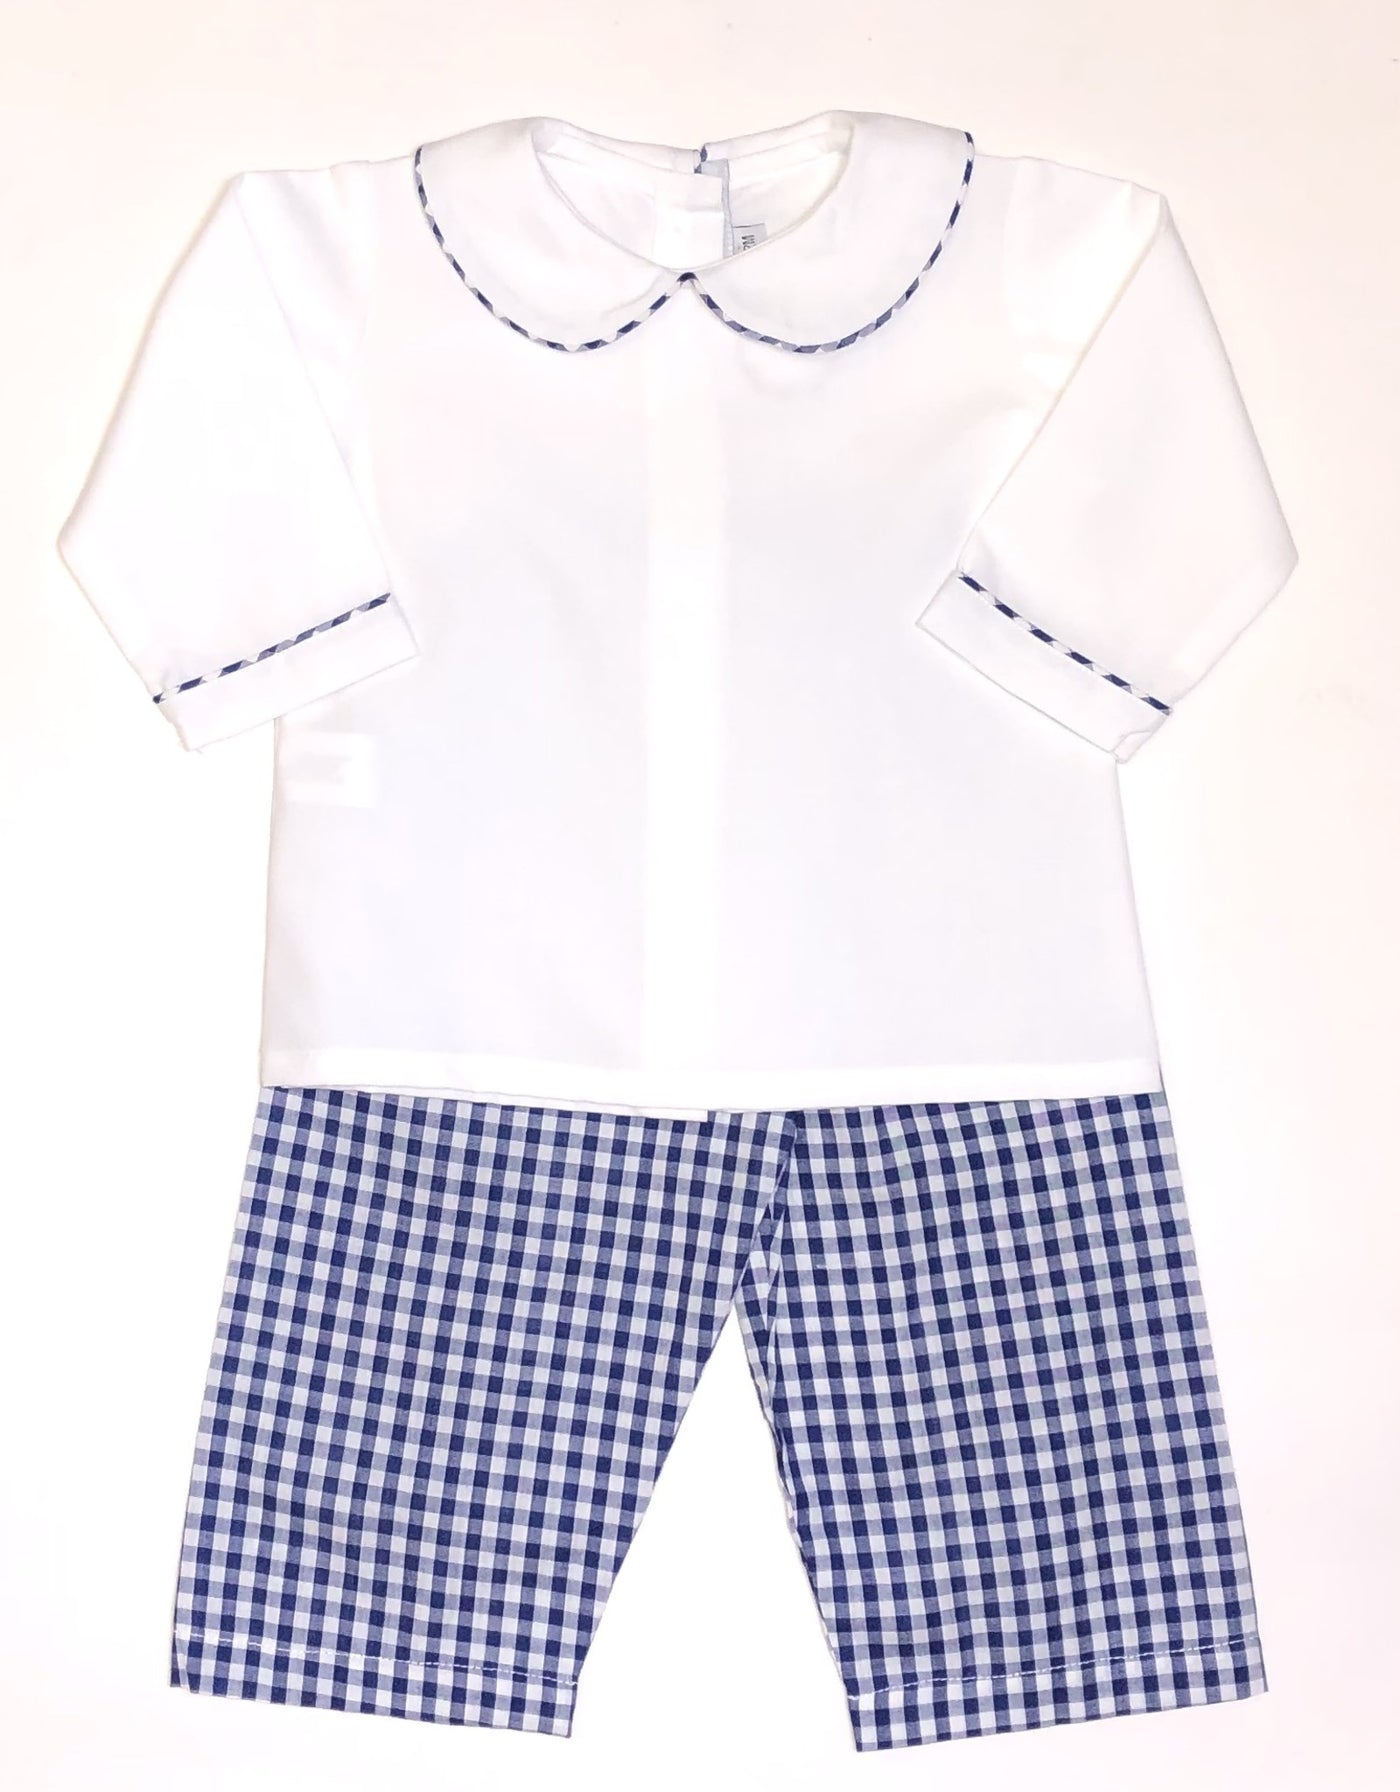 White/Royal Blue Gingham Pants Set